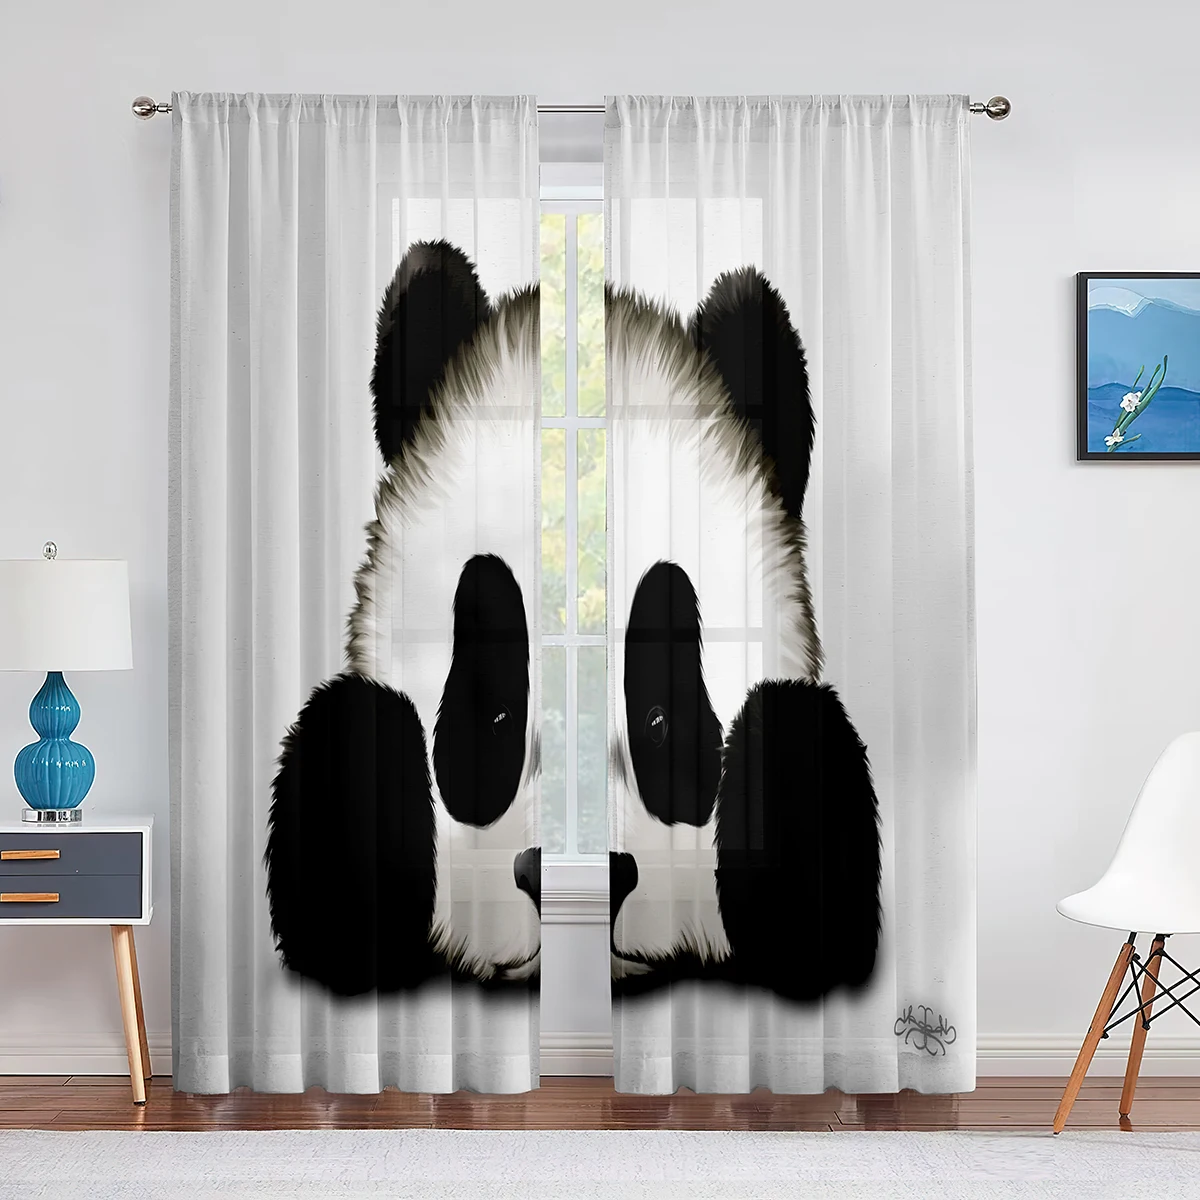 

Cartoon Panda Fun Animal Theme Tulle Curtains for Bedroom Black White Window Curtain Hotel Decor Home Living Room Sheer Drapes